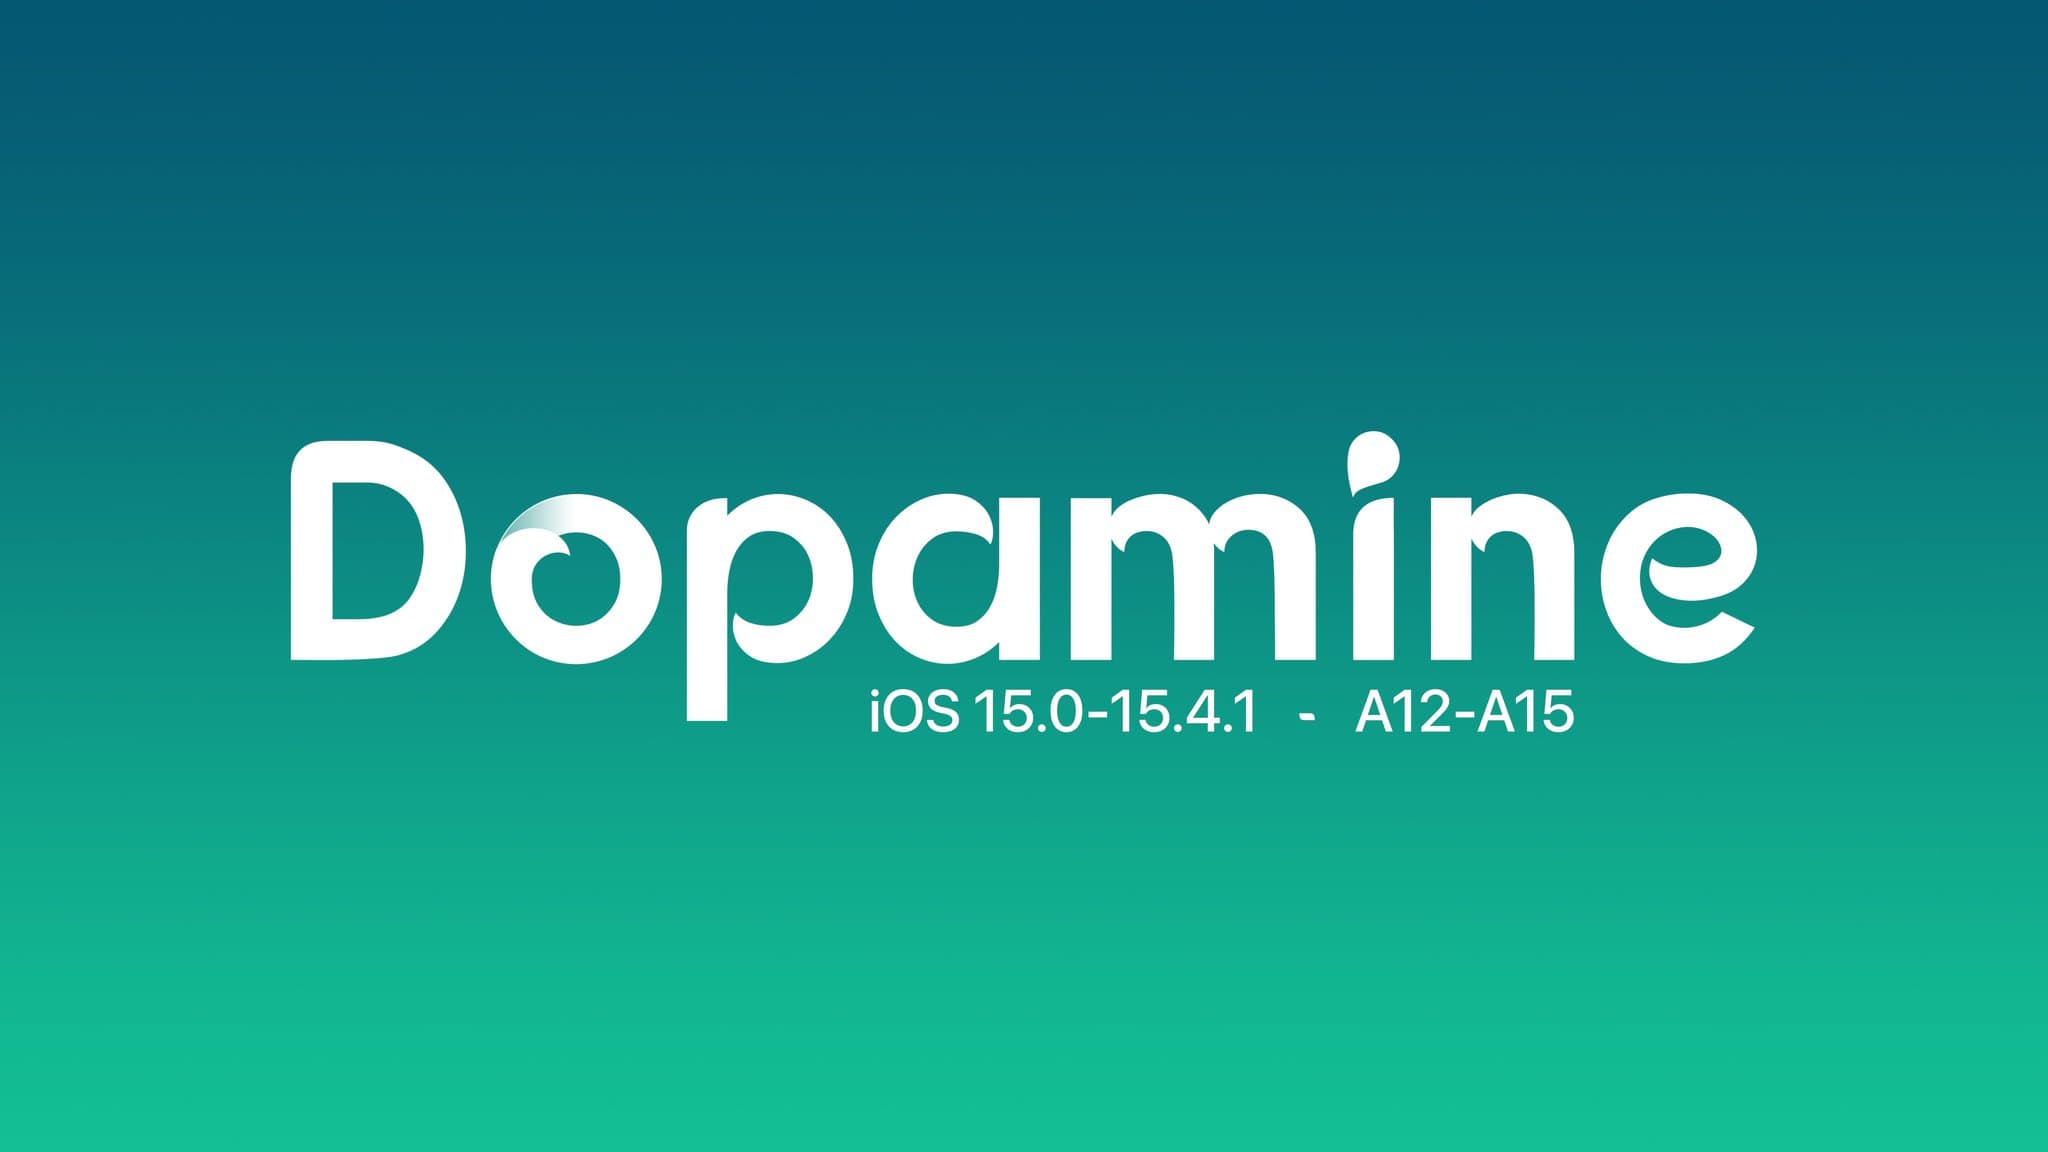 Cách jailbreak iOS 15.0 - 16.6.1 bằng Dopamine (thiết bị A12 - A16) 53